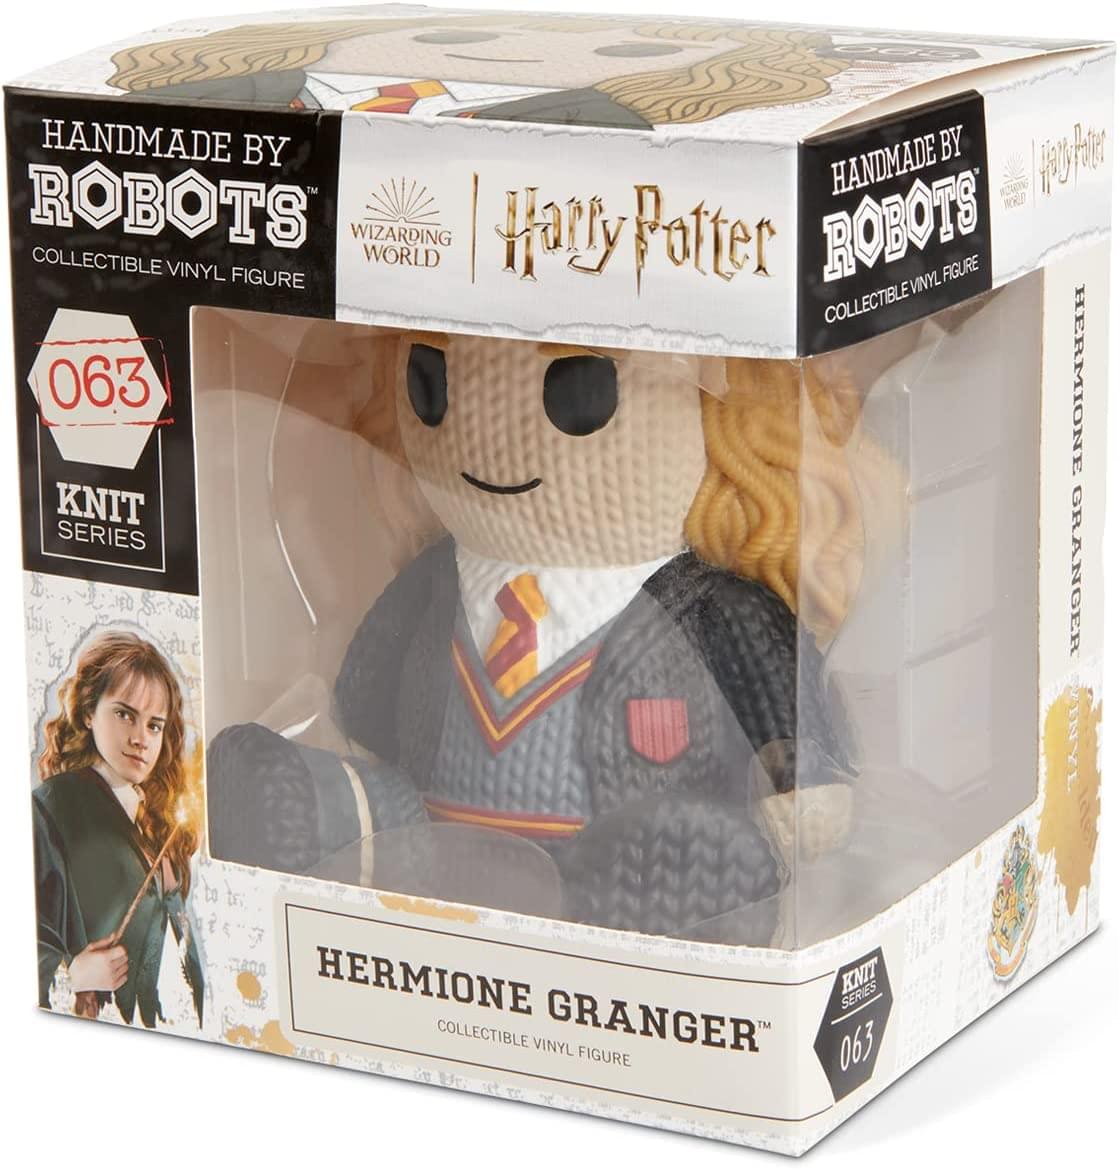 Harry Potter Handmade by Robots Vinyl Figure | Hermione Granger